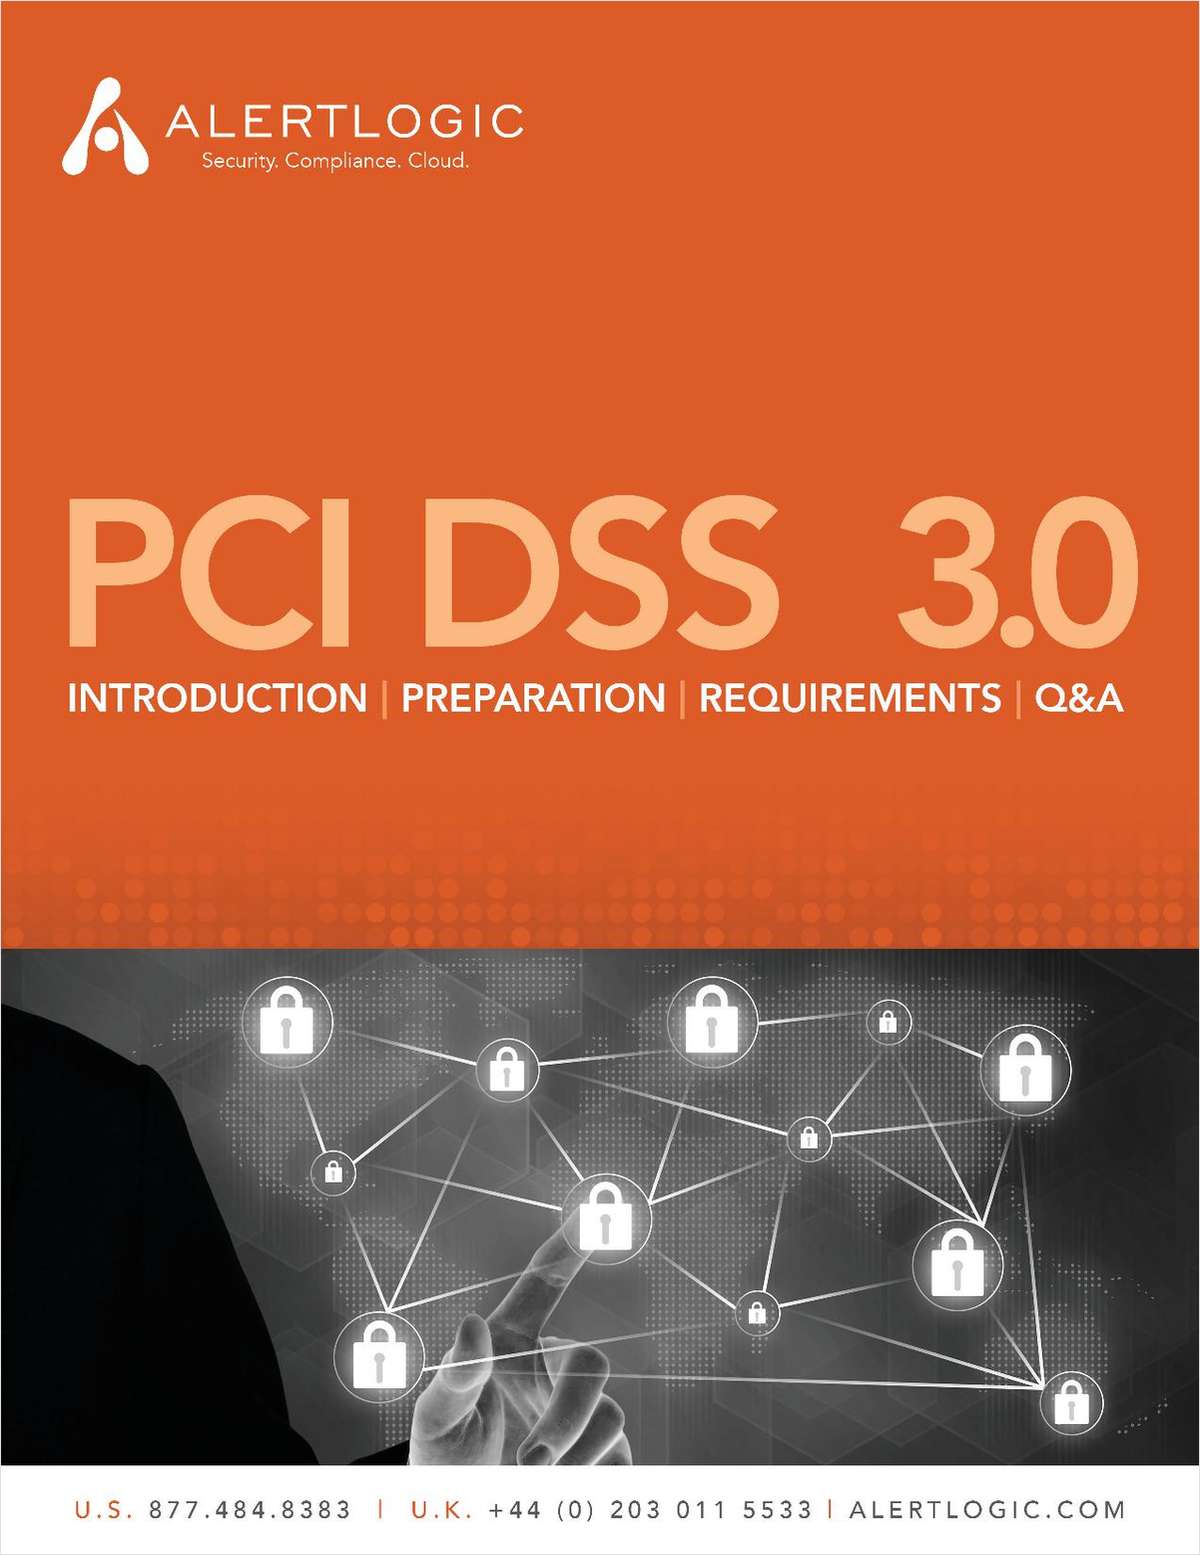 PCI DSS 3.0 Guidebook